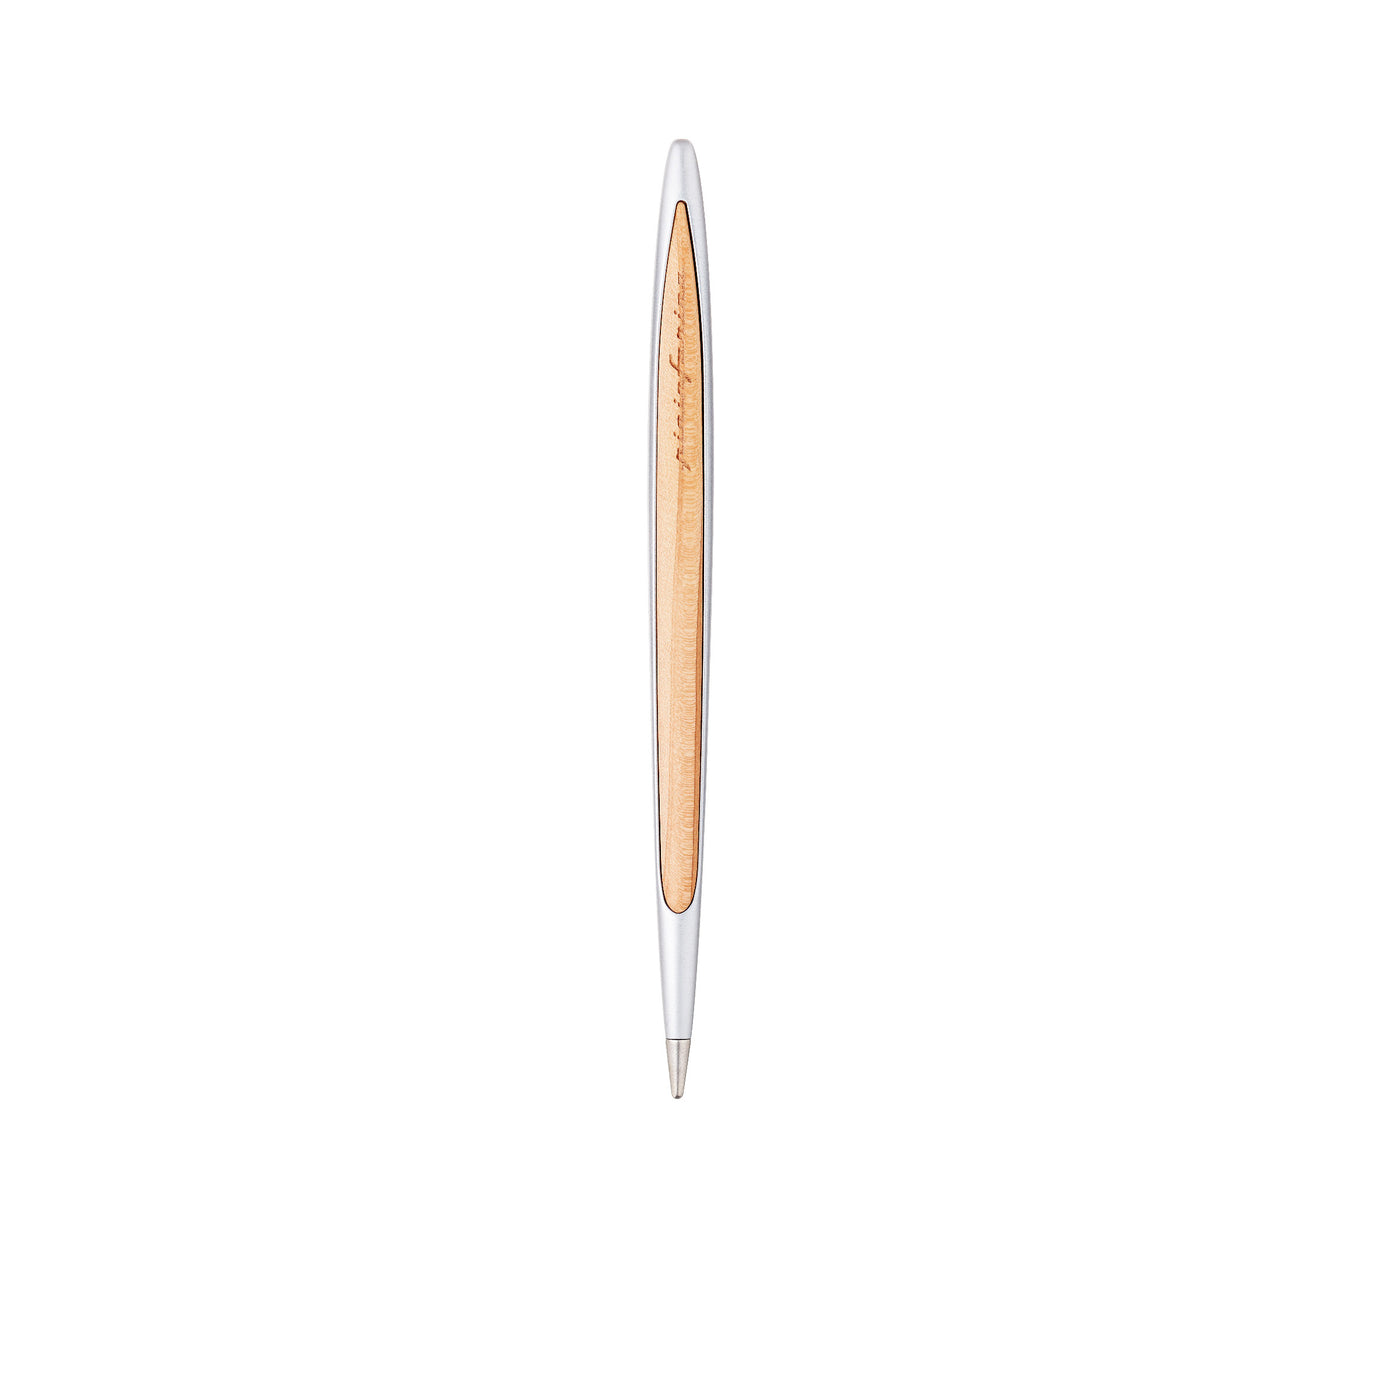 Inkless Pen CAMBIANO CLASSIC - ETHERGRAF® Cedar Wood by Pininfarina Segno 05